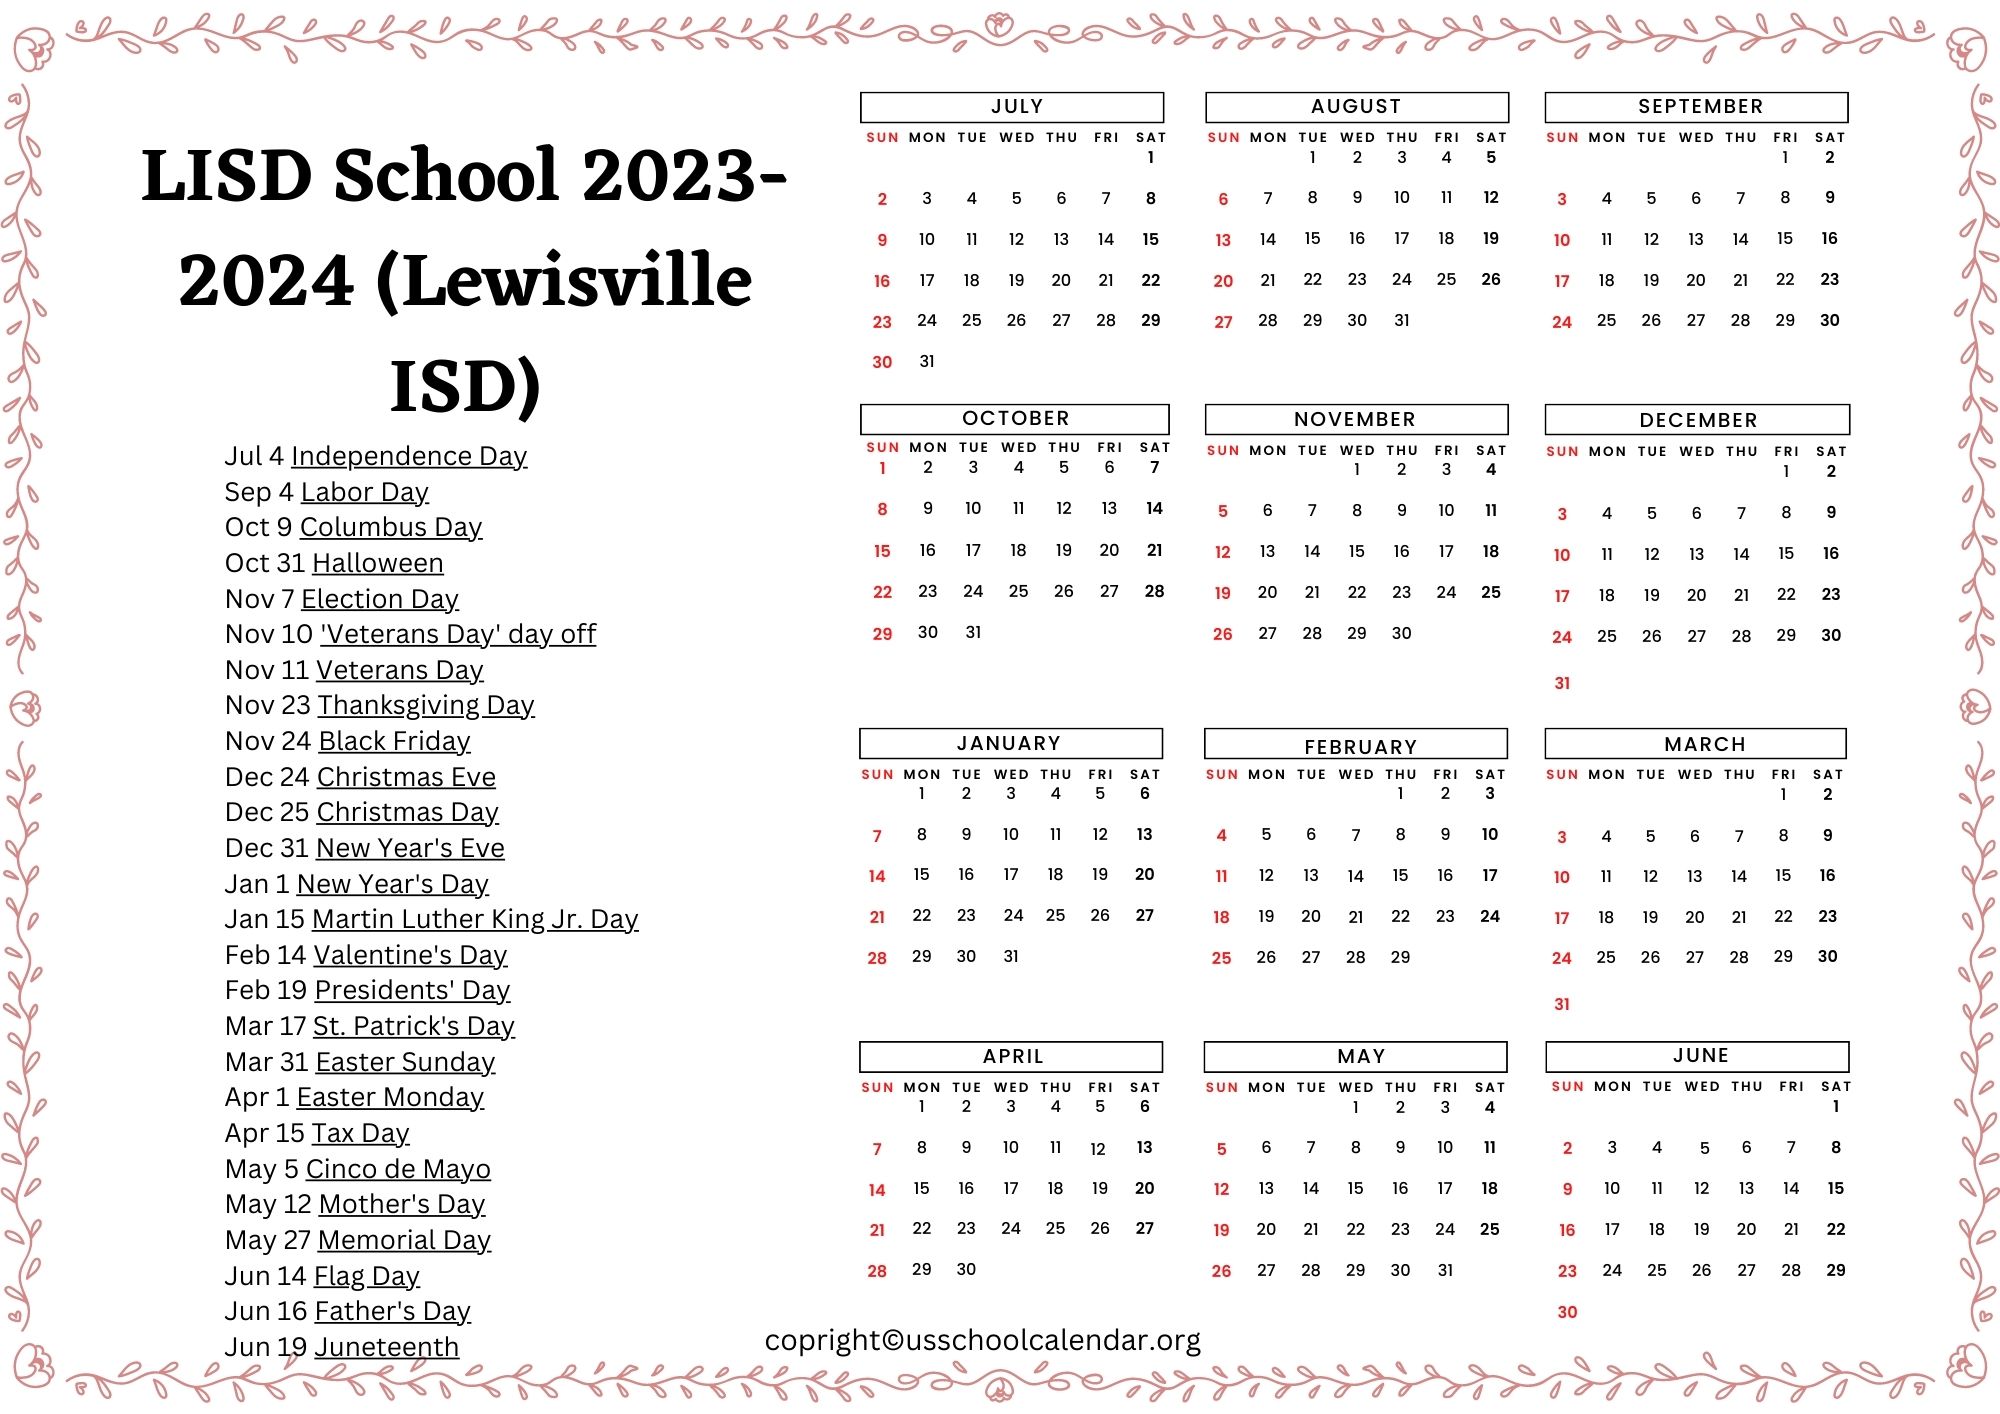 LISD School Calendar With Holidays 2023 2024 Lewisville ISD 